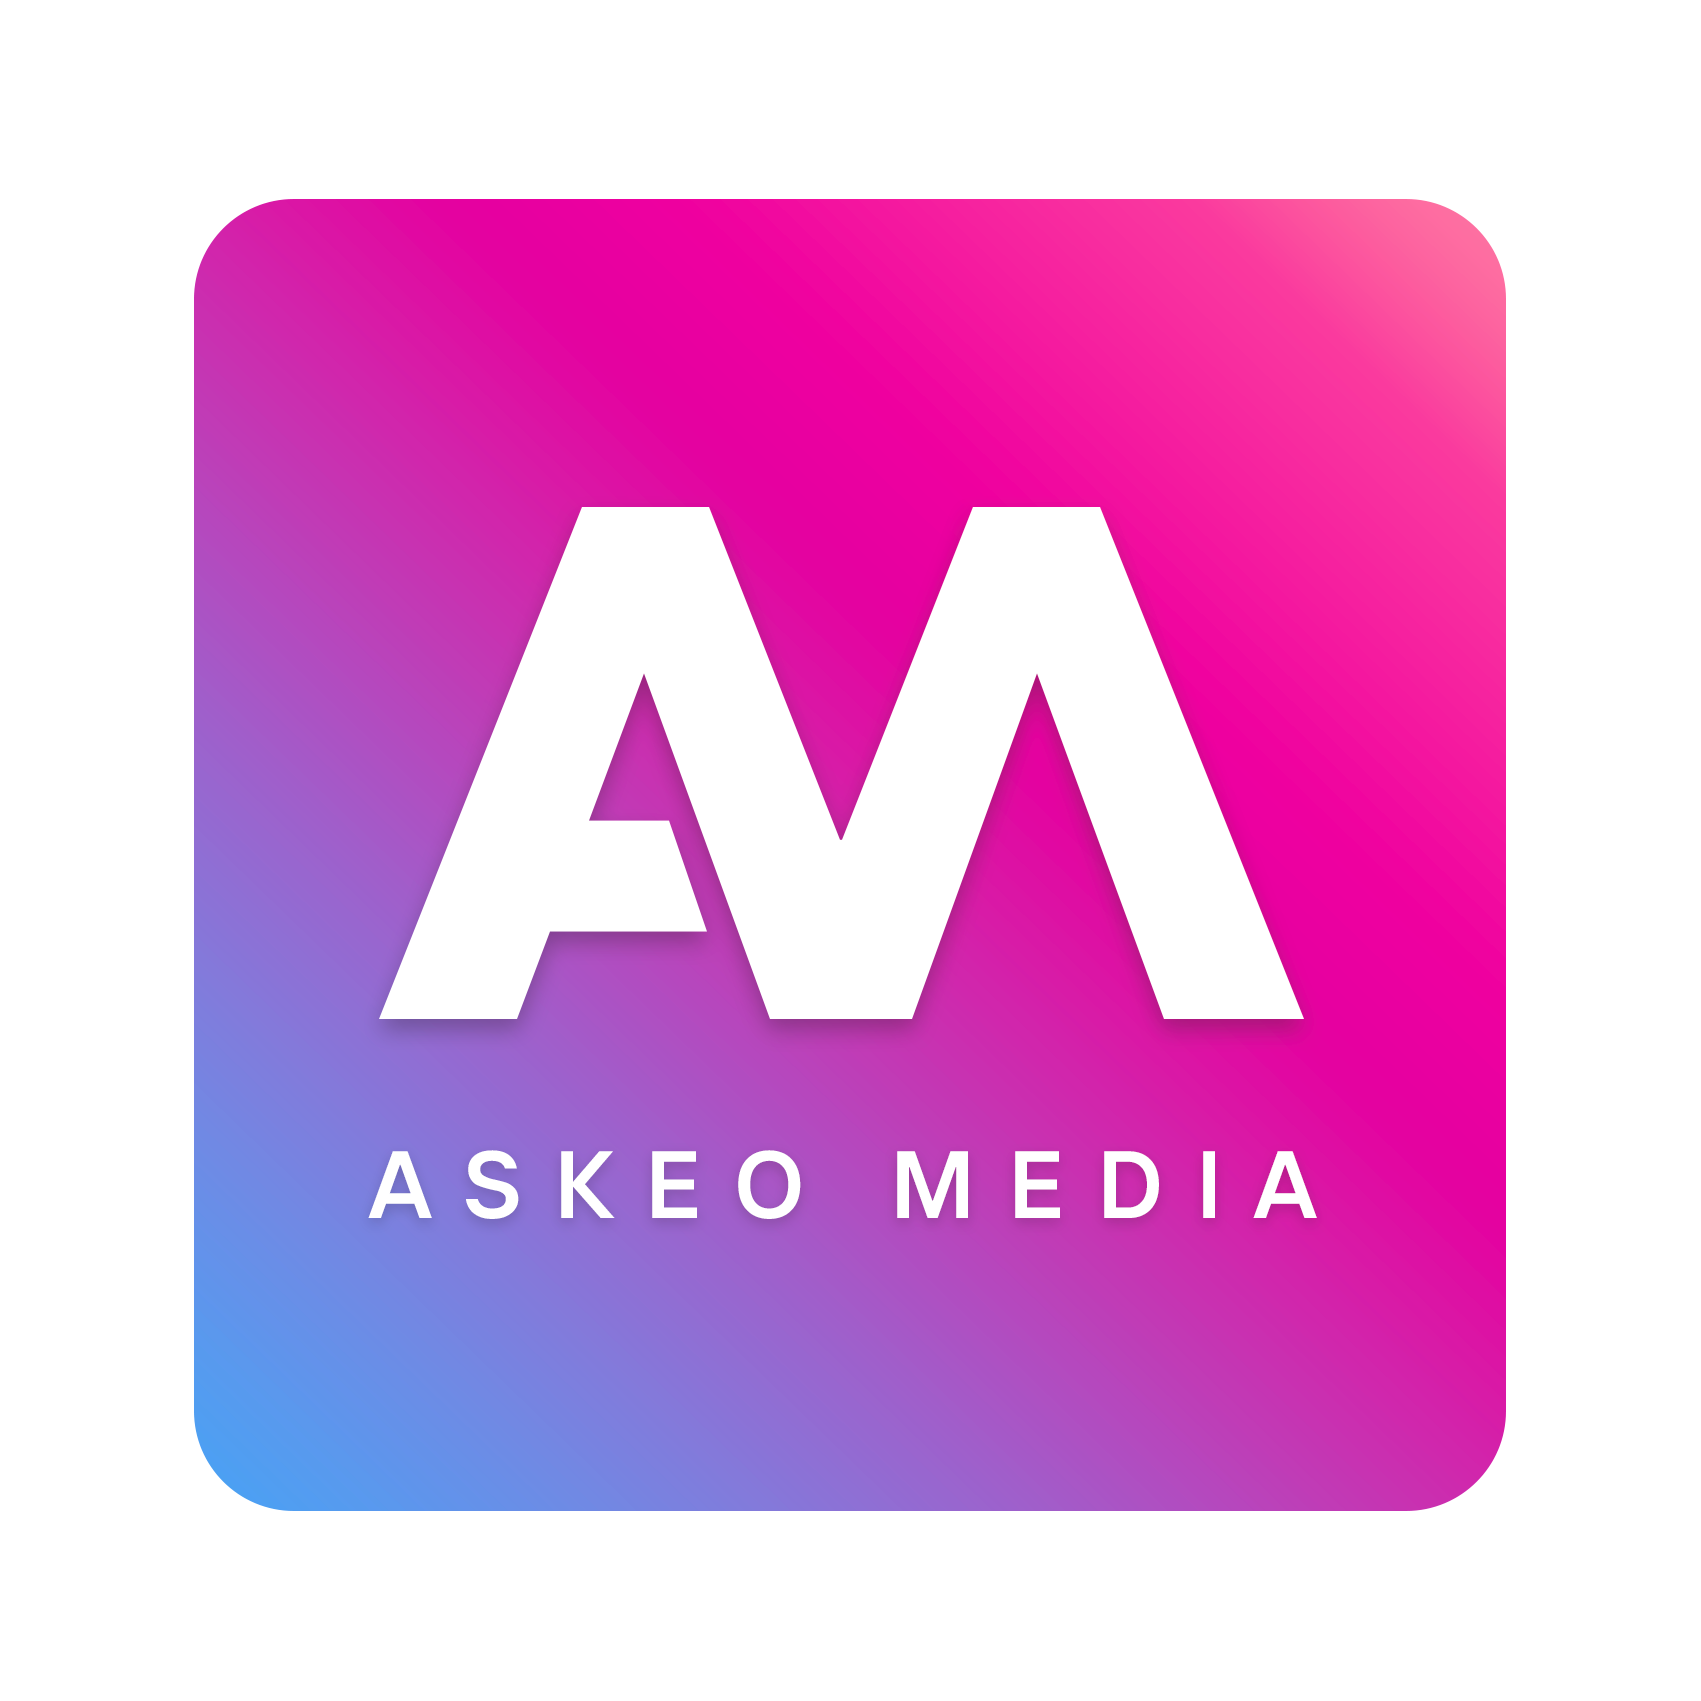 Askeomedia